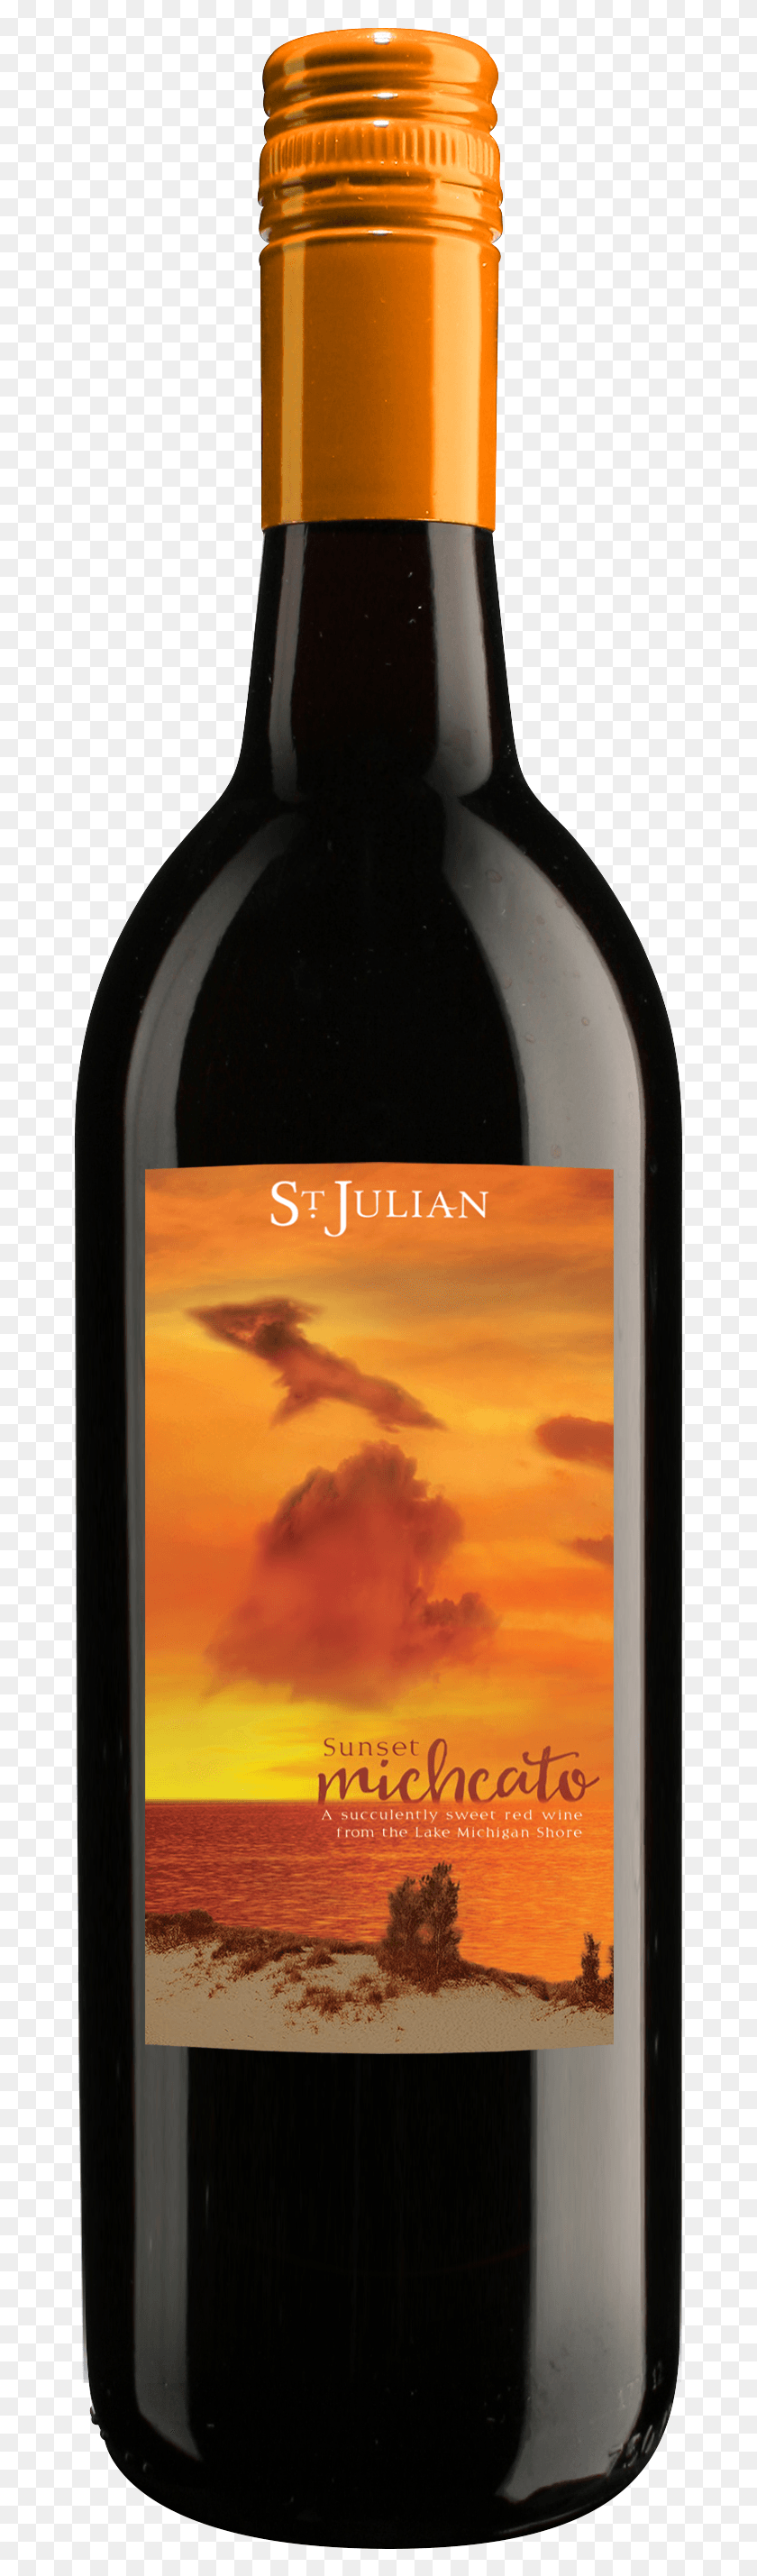 675x2798 St Julian Michcato, Vino, Alcohol, Bebidas Hd Png